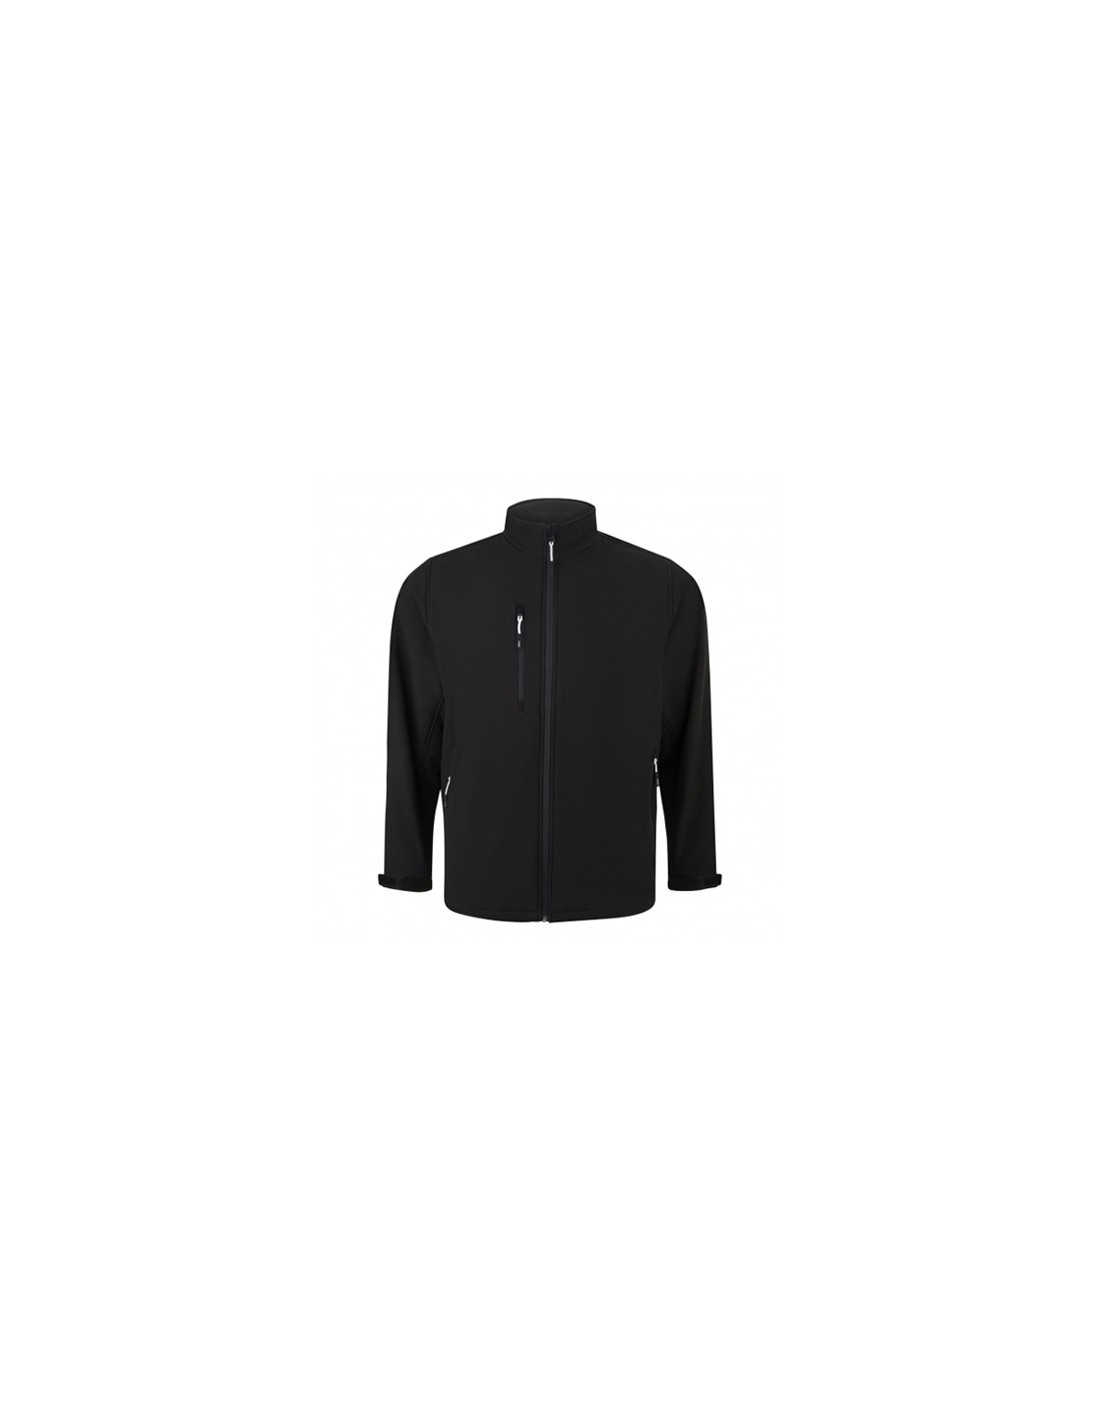 ORN Clothing 4900 Cardinal Heated Softshell Jacket - Size XS to 3XL